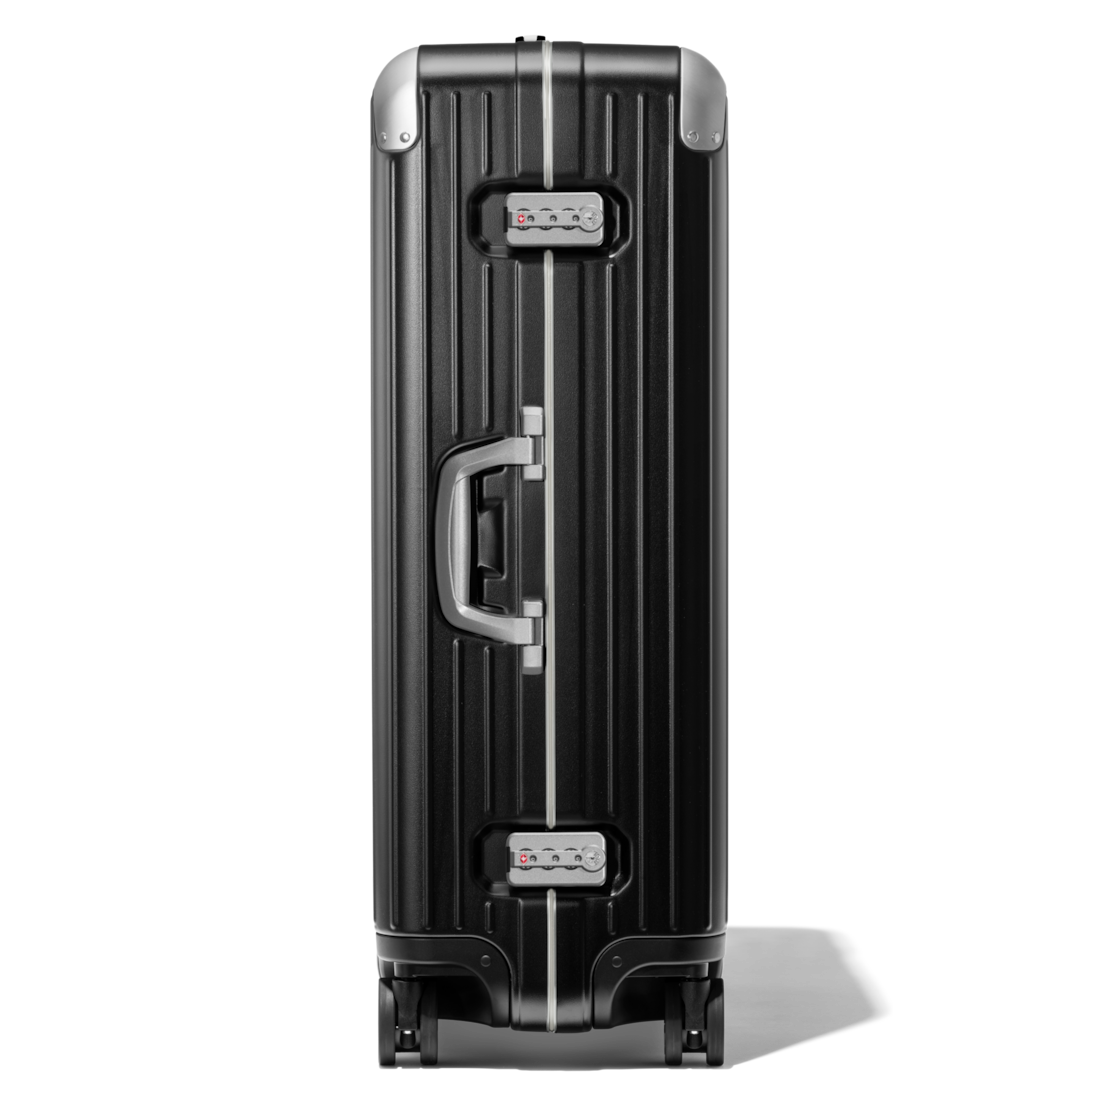 Hybrid Large Check-In L スーツケース | ブラック | RIMOWA